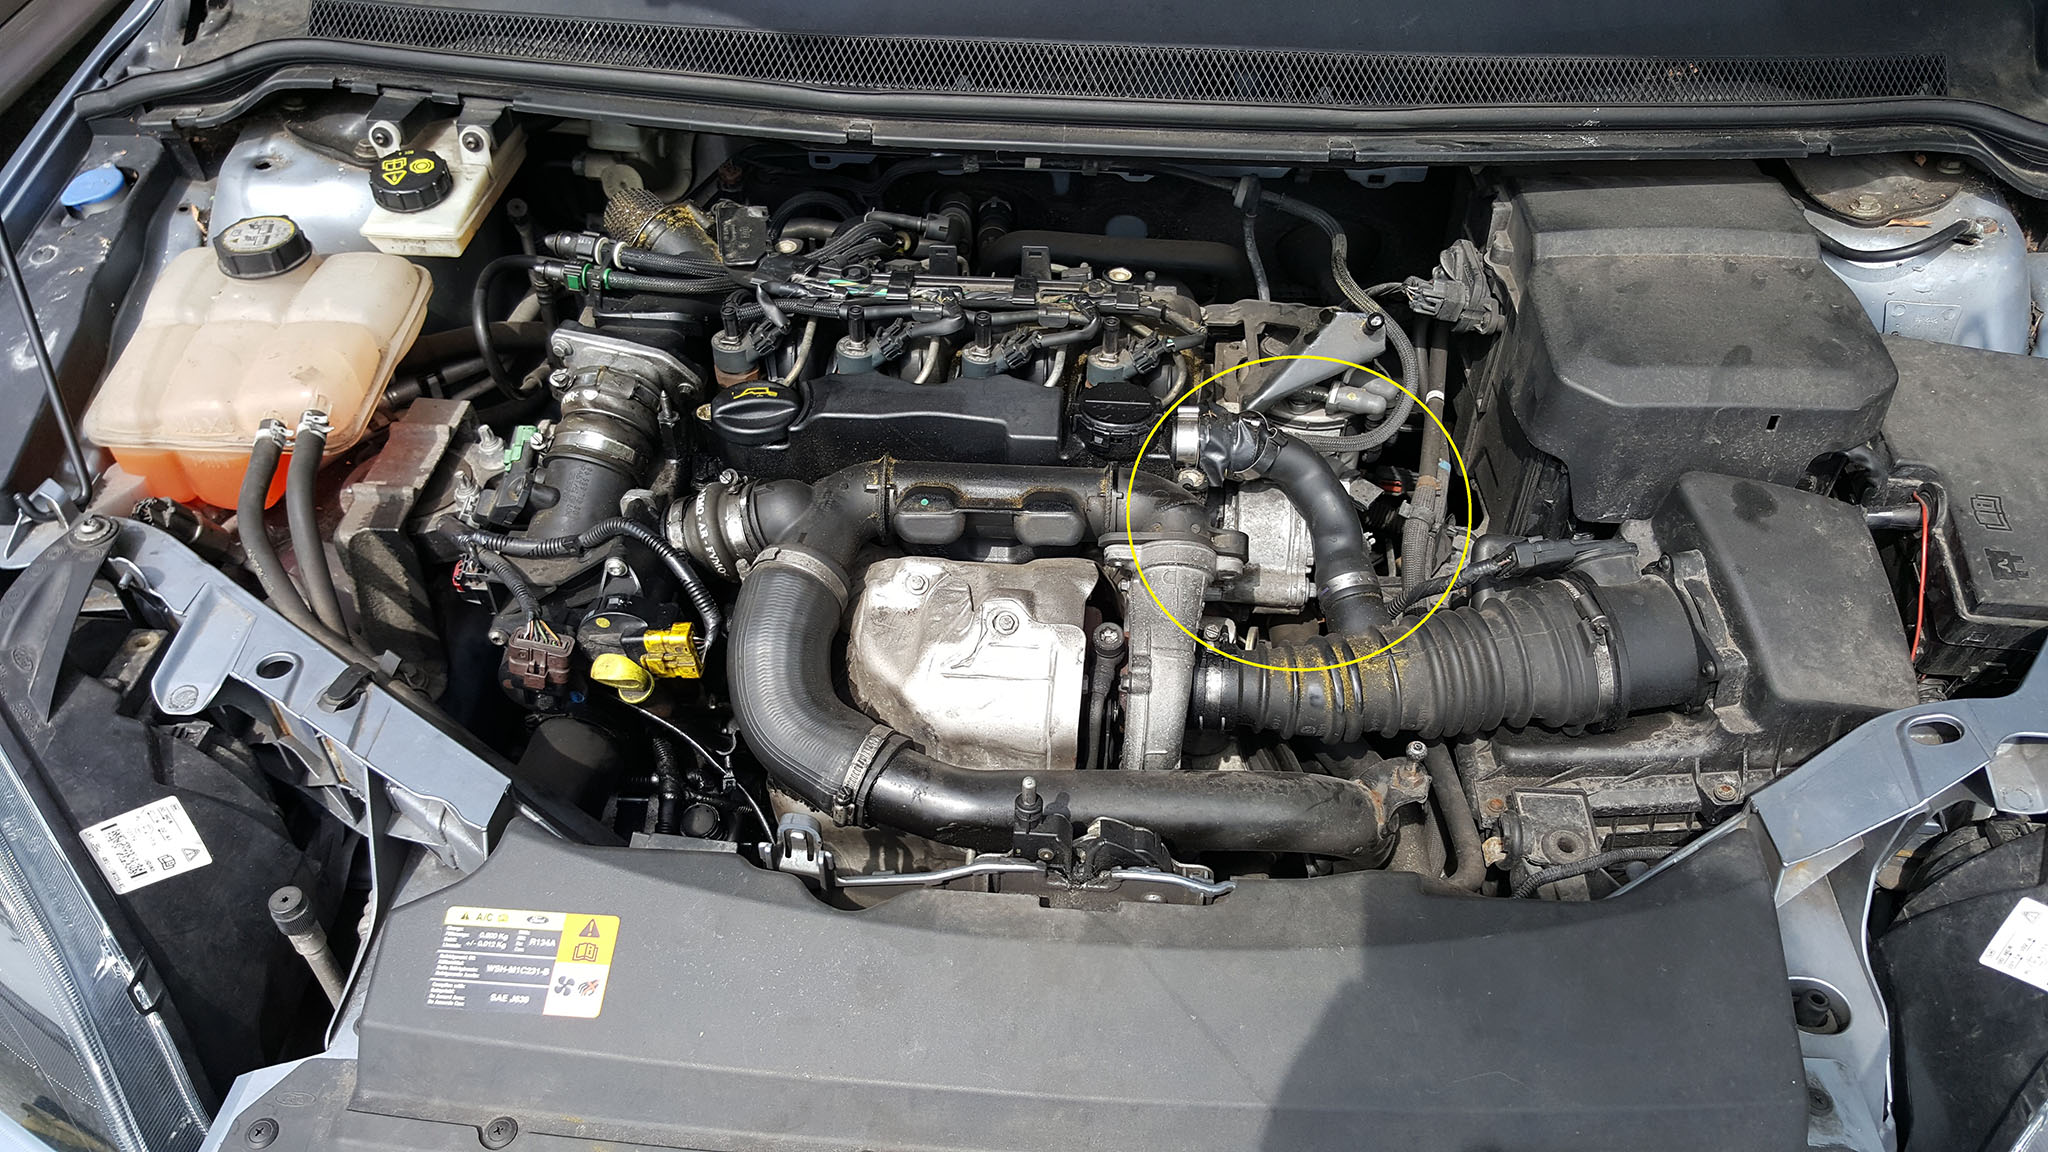 Loss of power on ford focus diesel #9